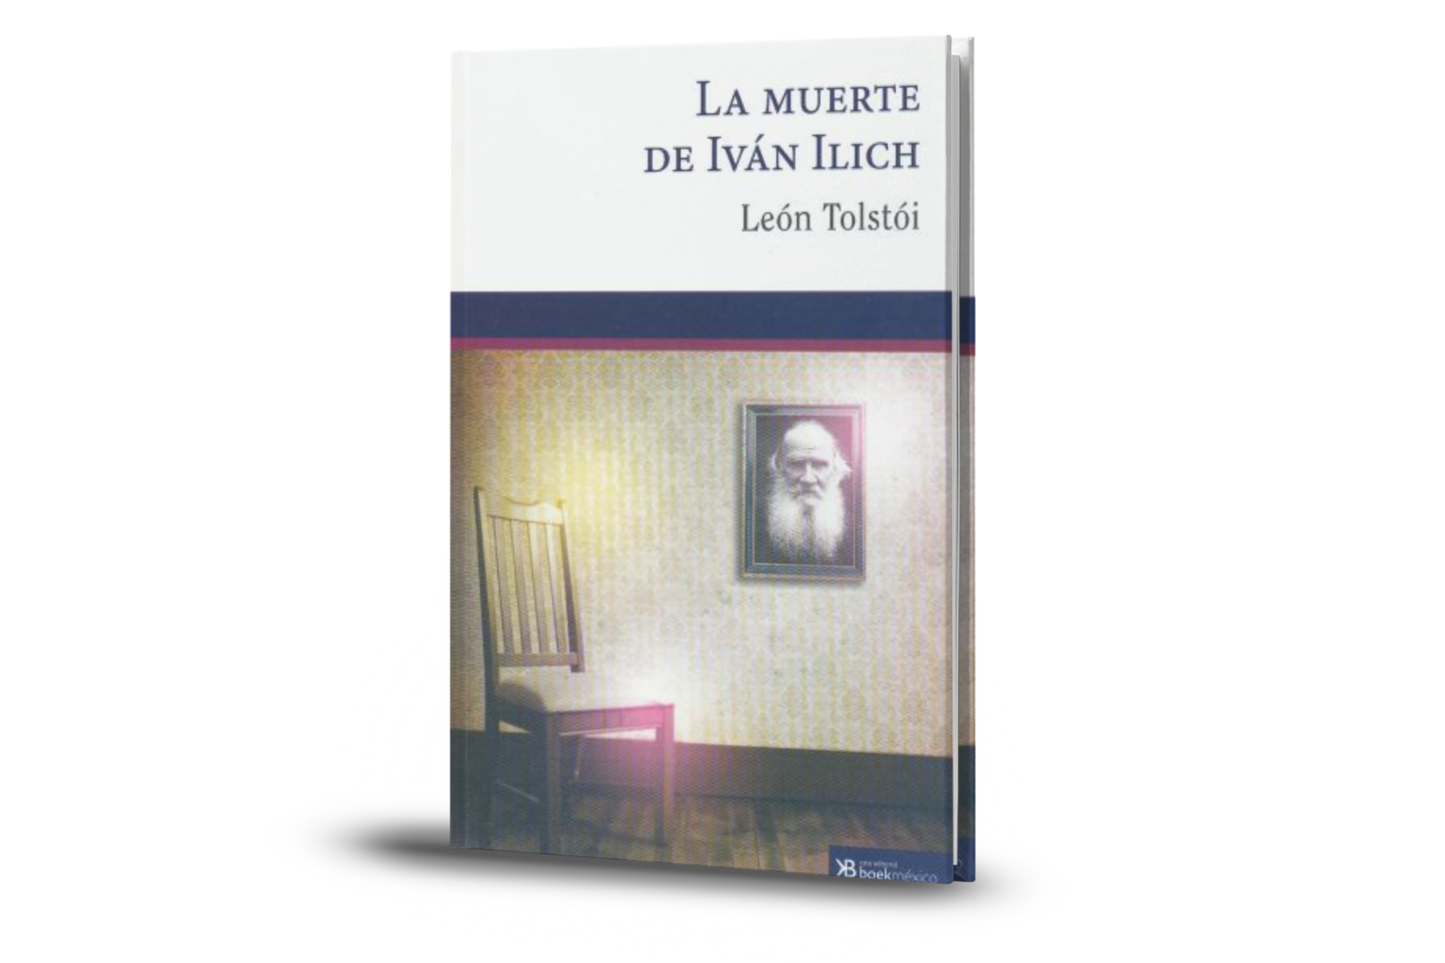 La Muerte De Ivan Ilich - Leon Tolstoi